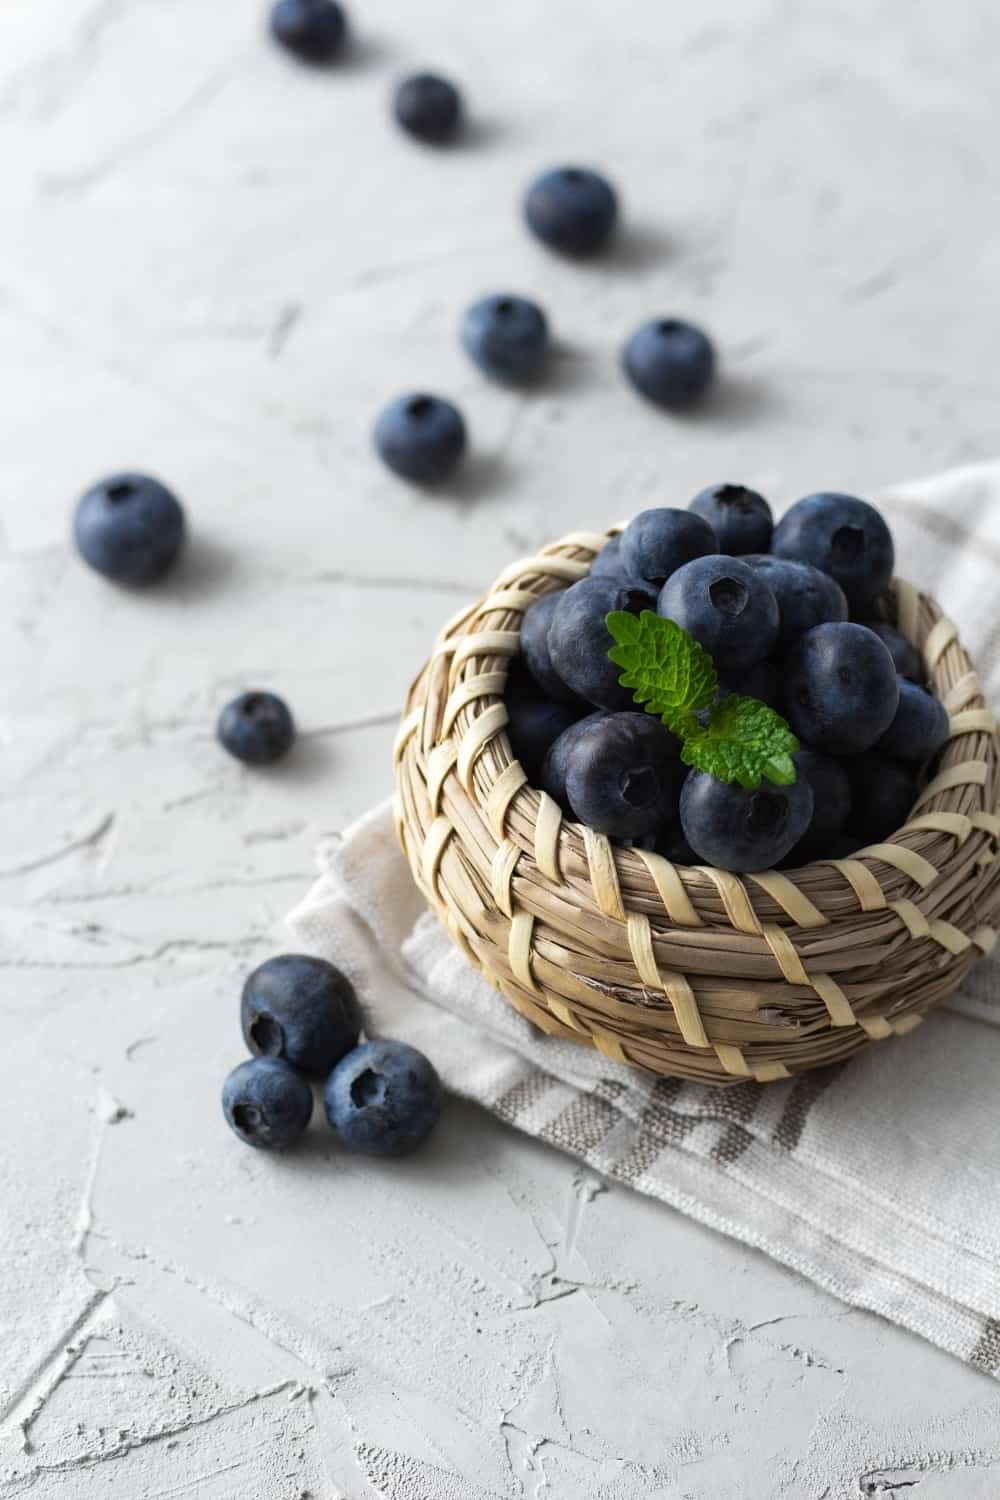 Sweet blueberries in wicker basket on the towel